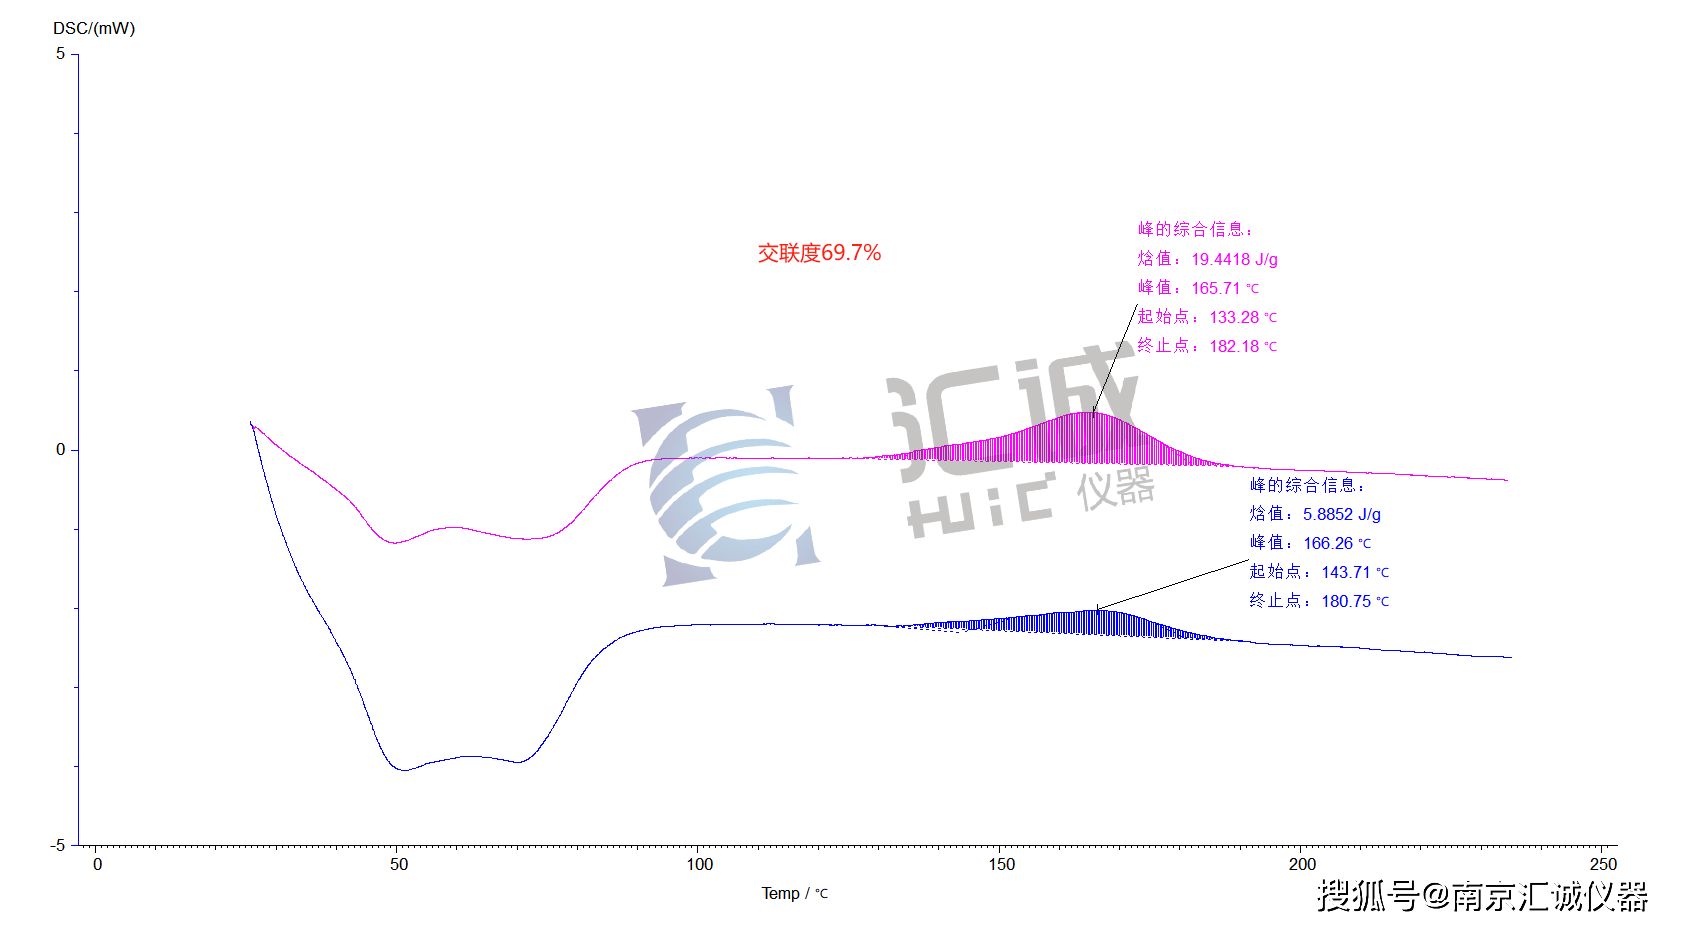 4418 j/g;蓝色曲线为层压样品的曲线图谱,其焓值是58852 j/g